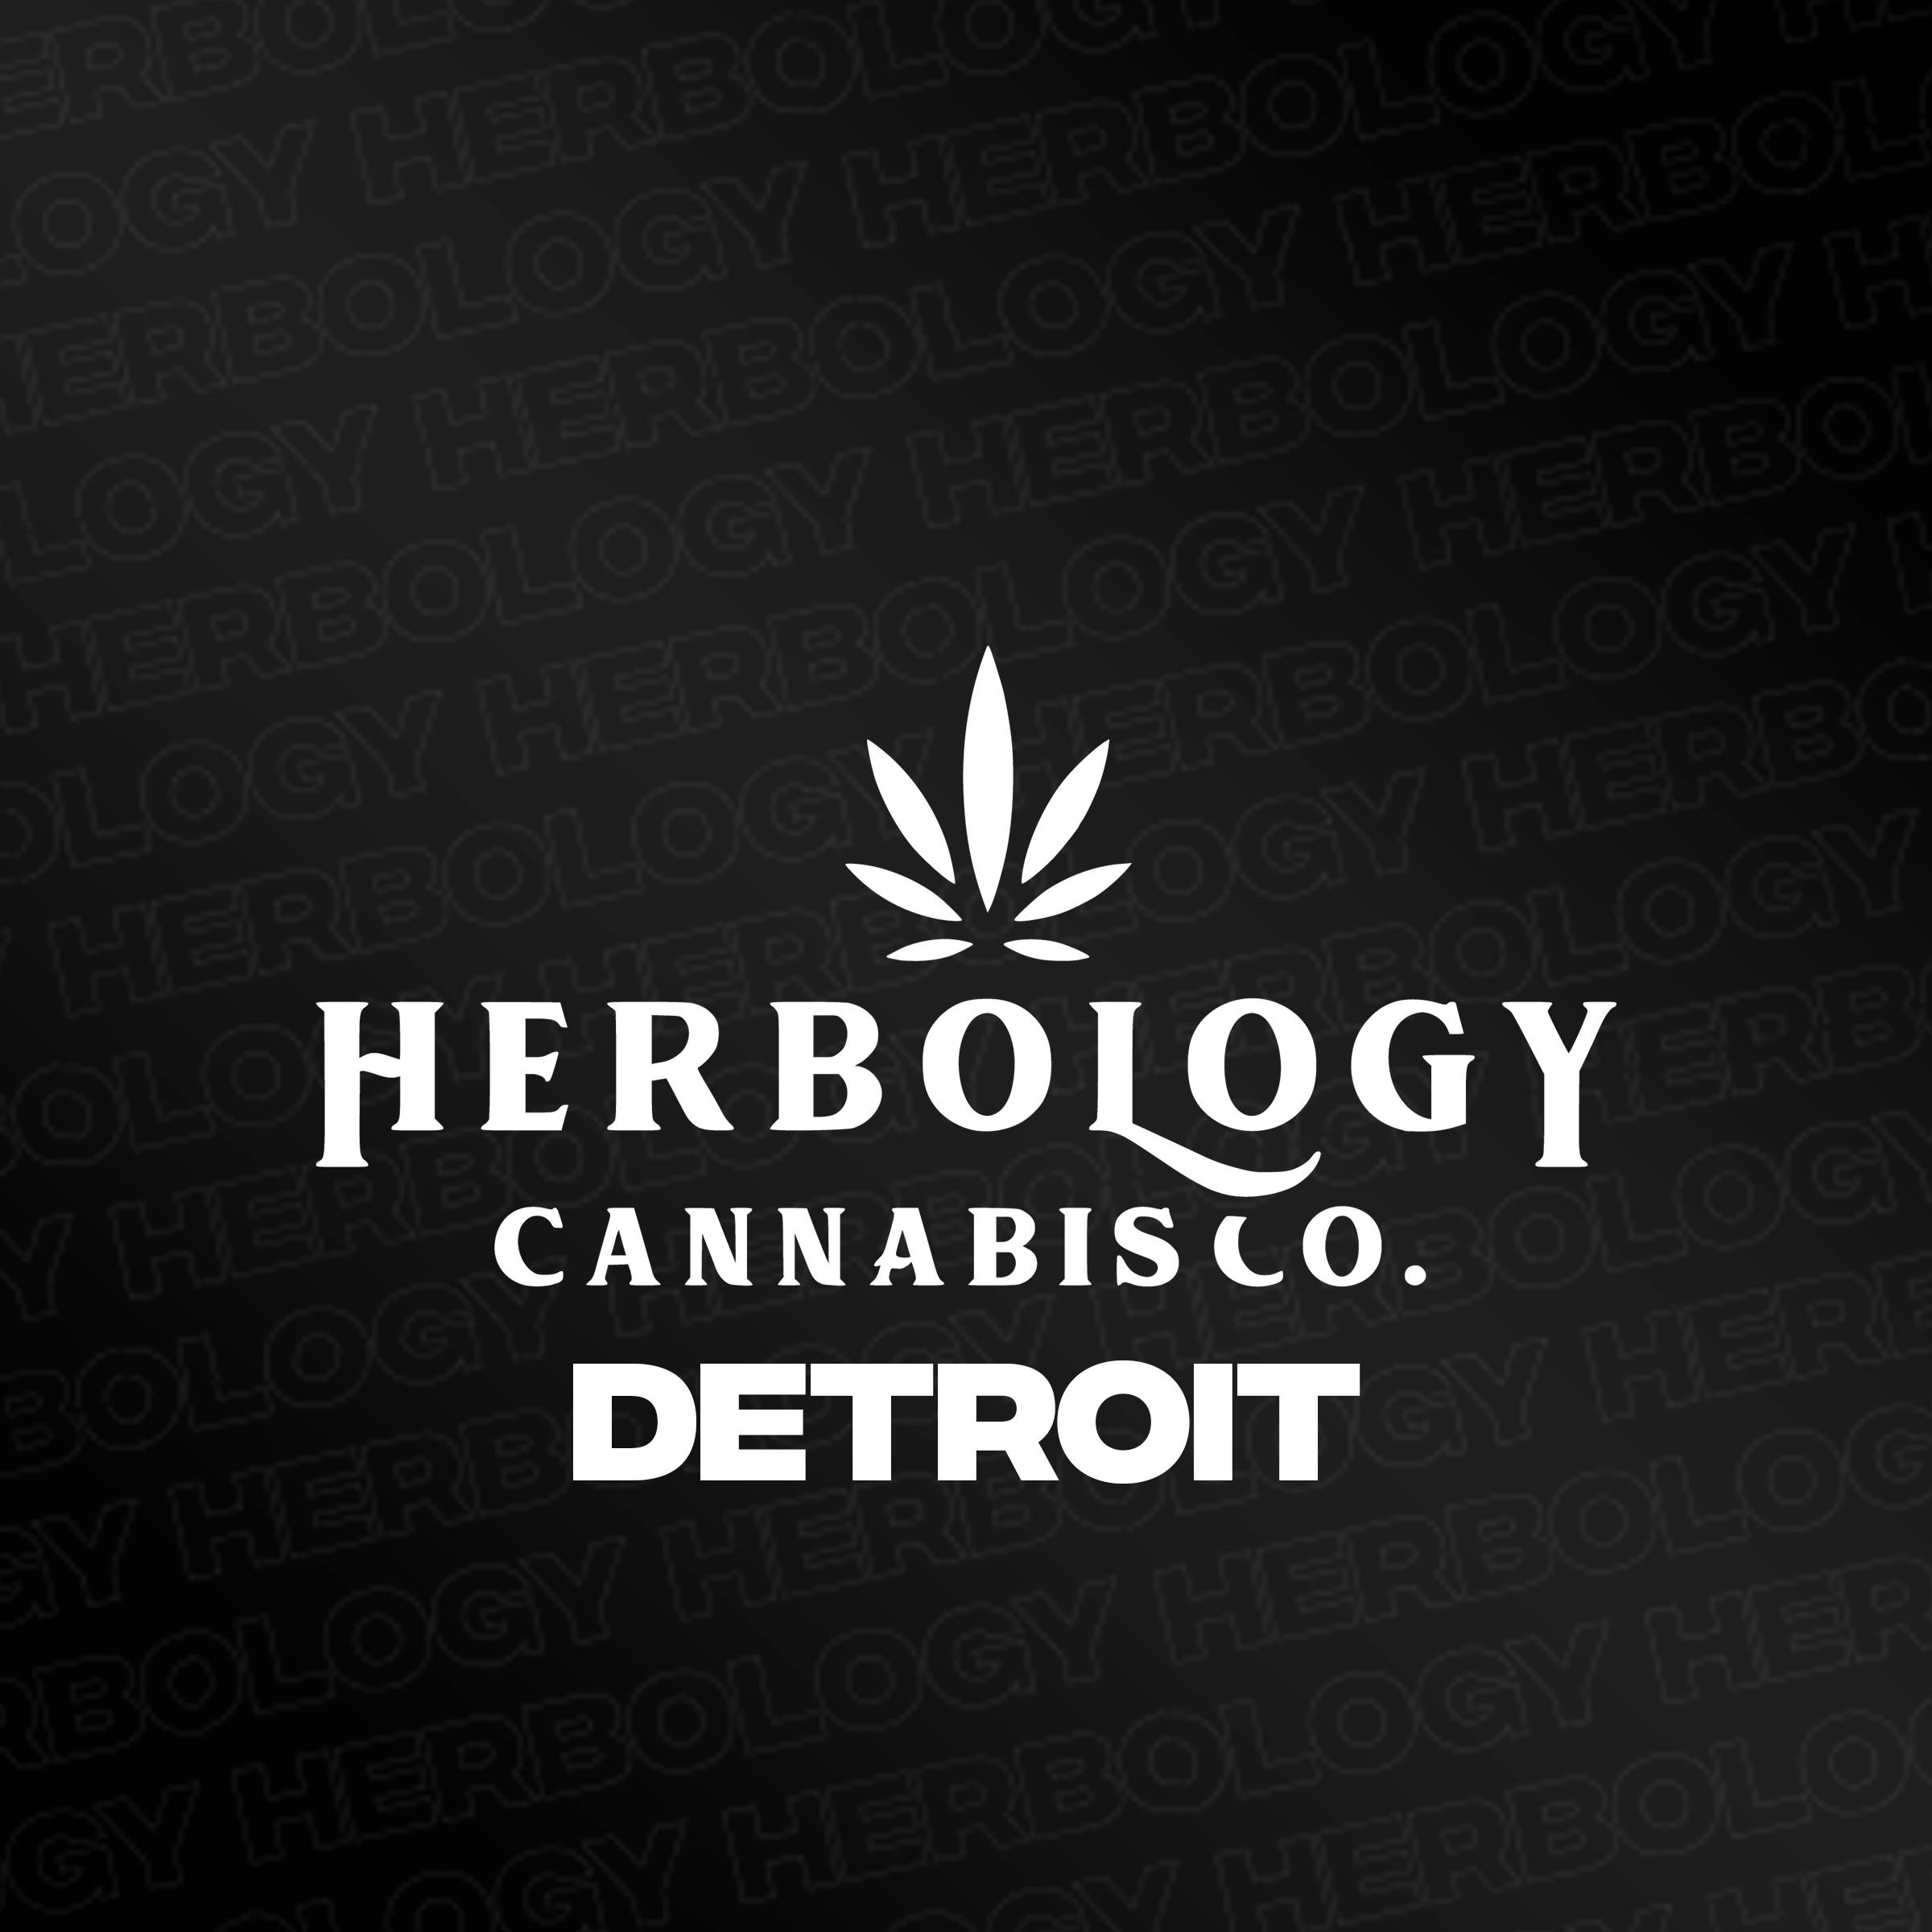 Herbology Cannabis Co. Detroit - Recreational Cannabis Dispensary-logo